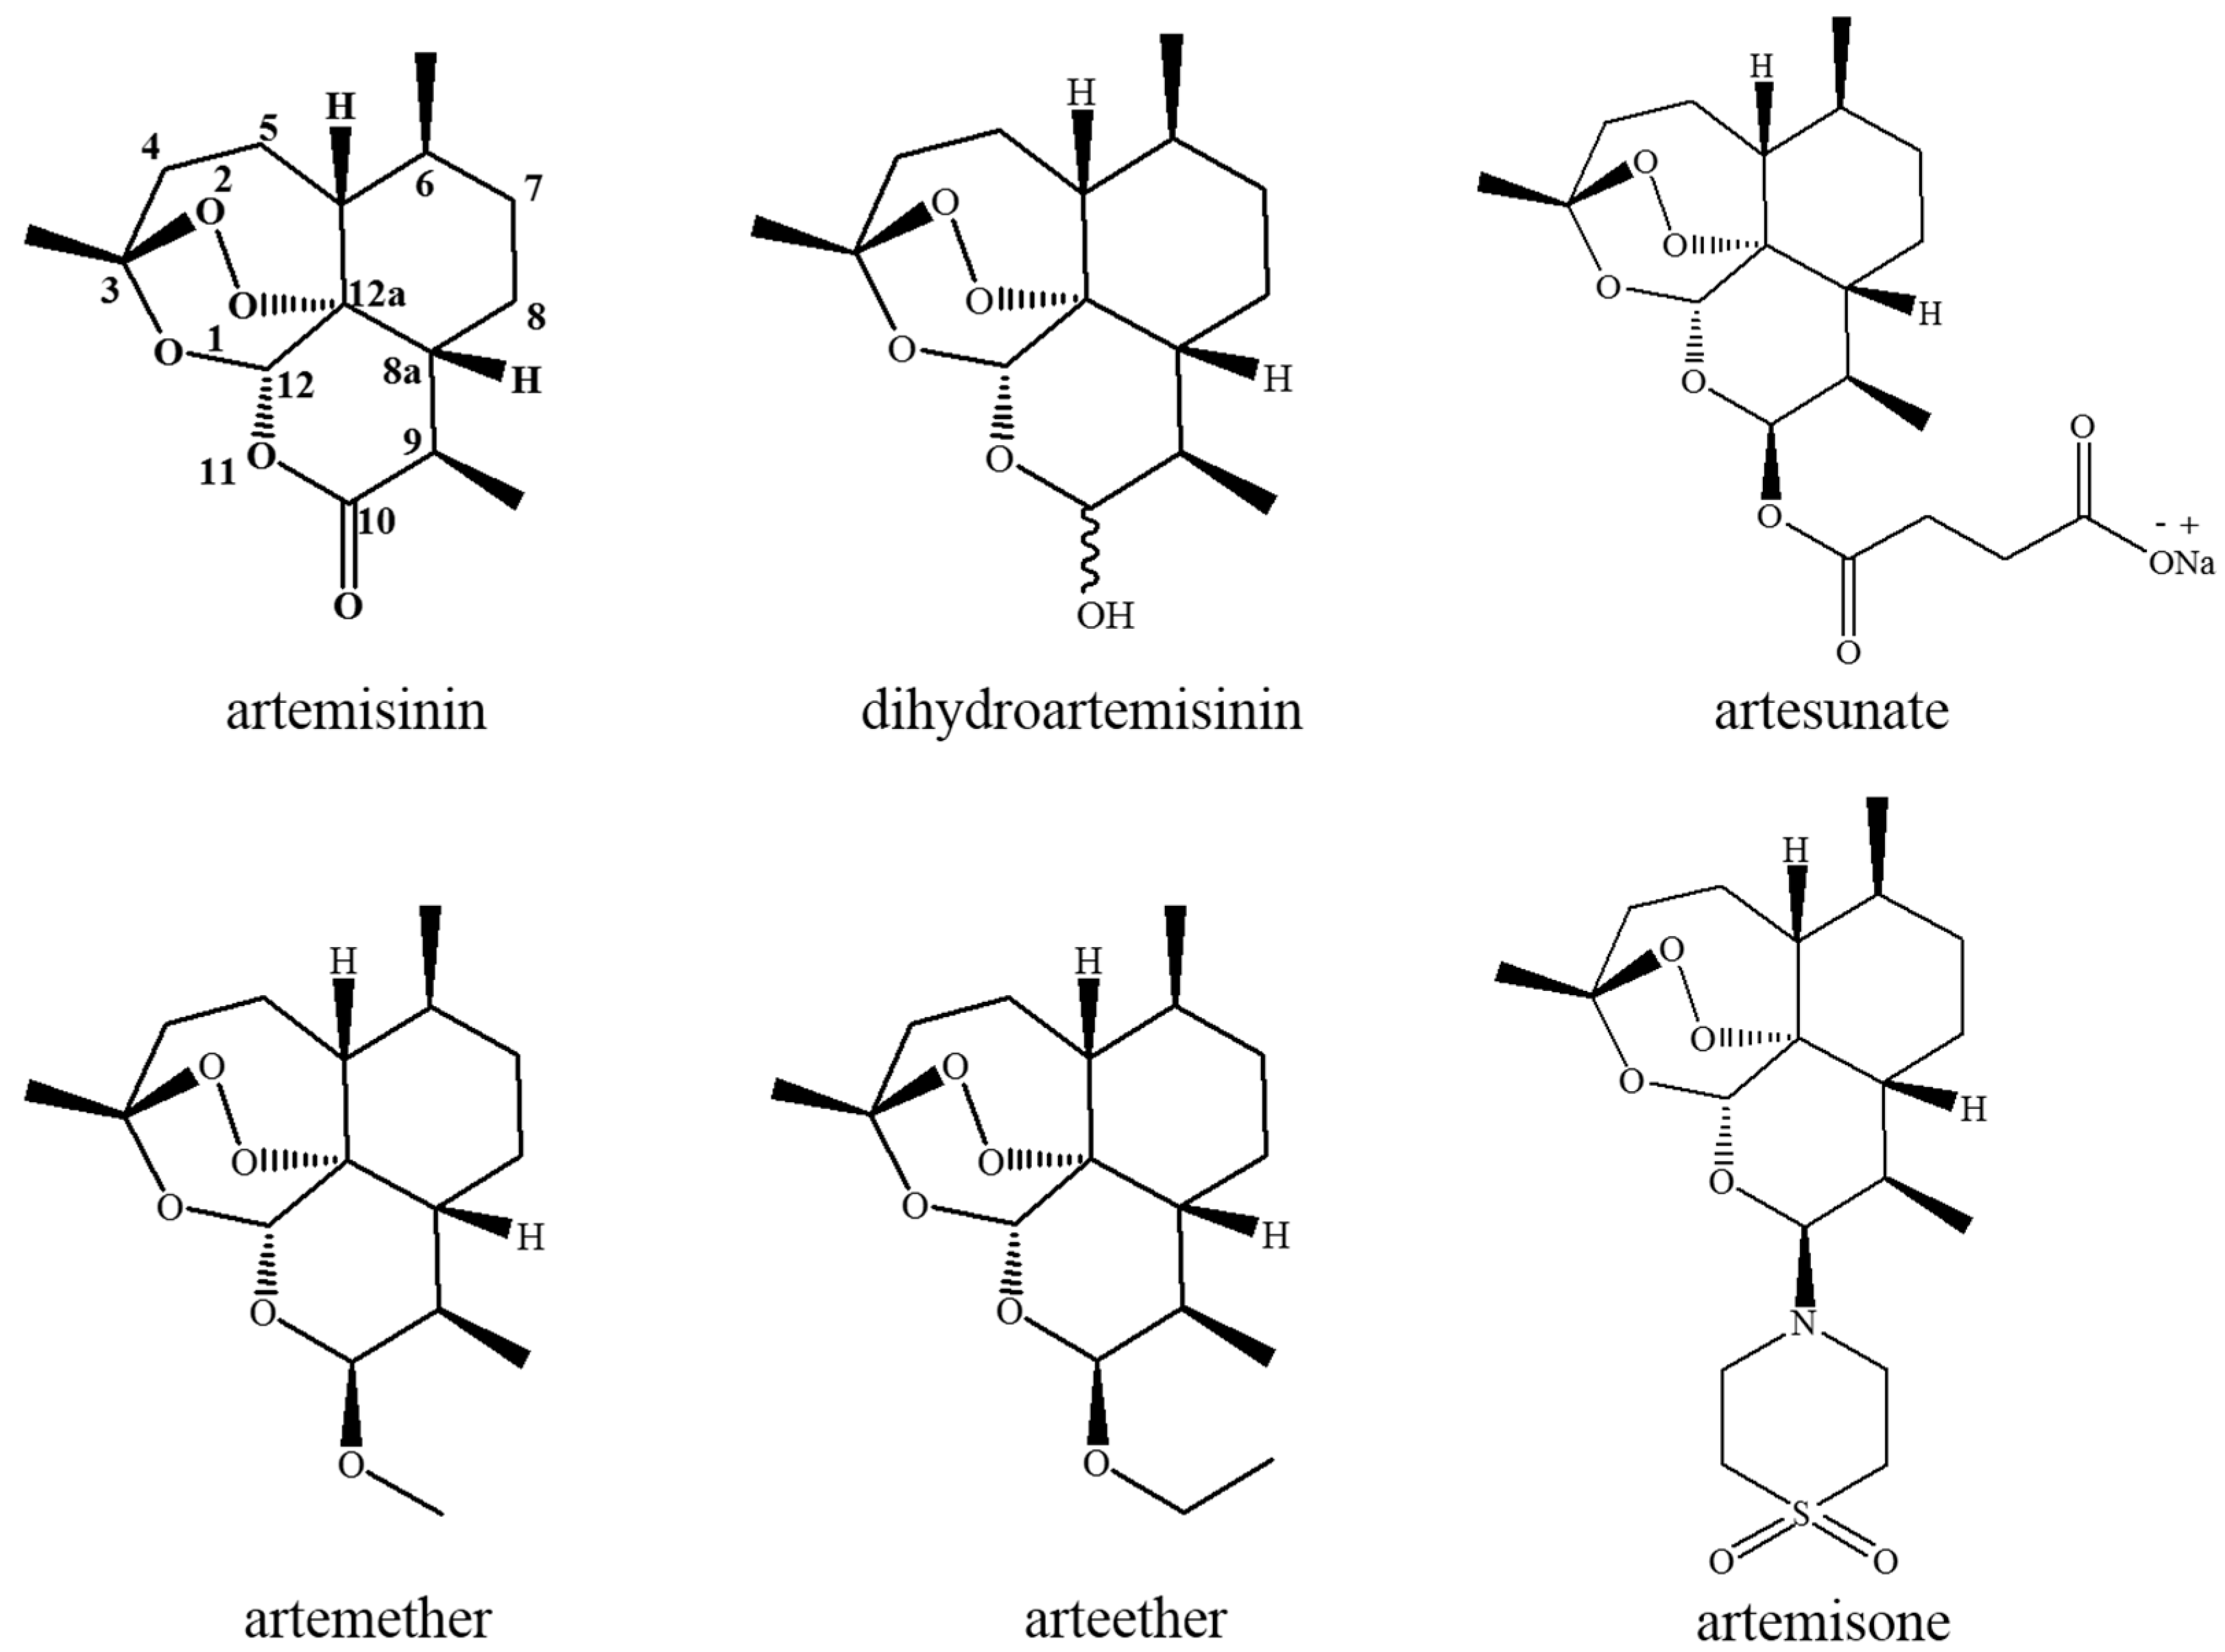 https://www.mdpi.com/molecules/molecules-21-01331/article_deploy/html/images/molecules-21-01331-g001.png